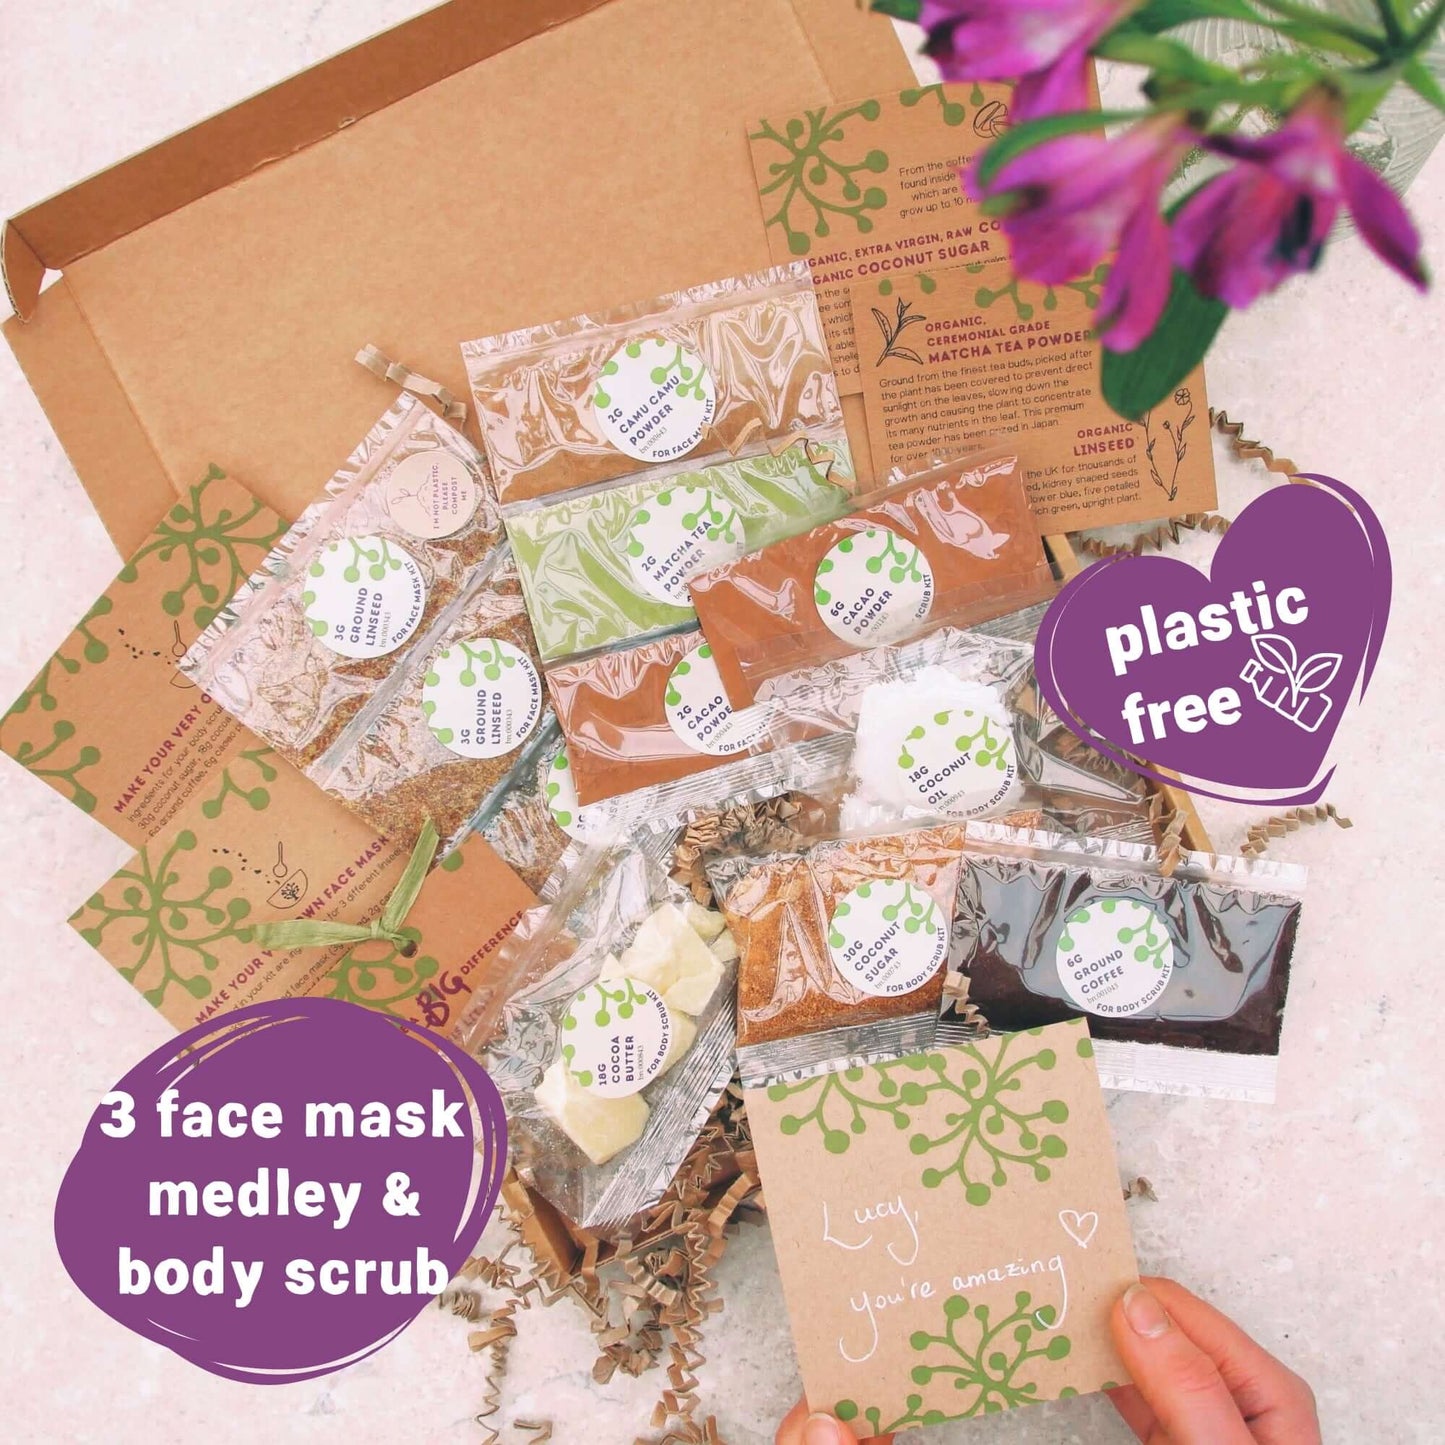 plastic free organic skincare kit ingredients inside birthday letterbox gift